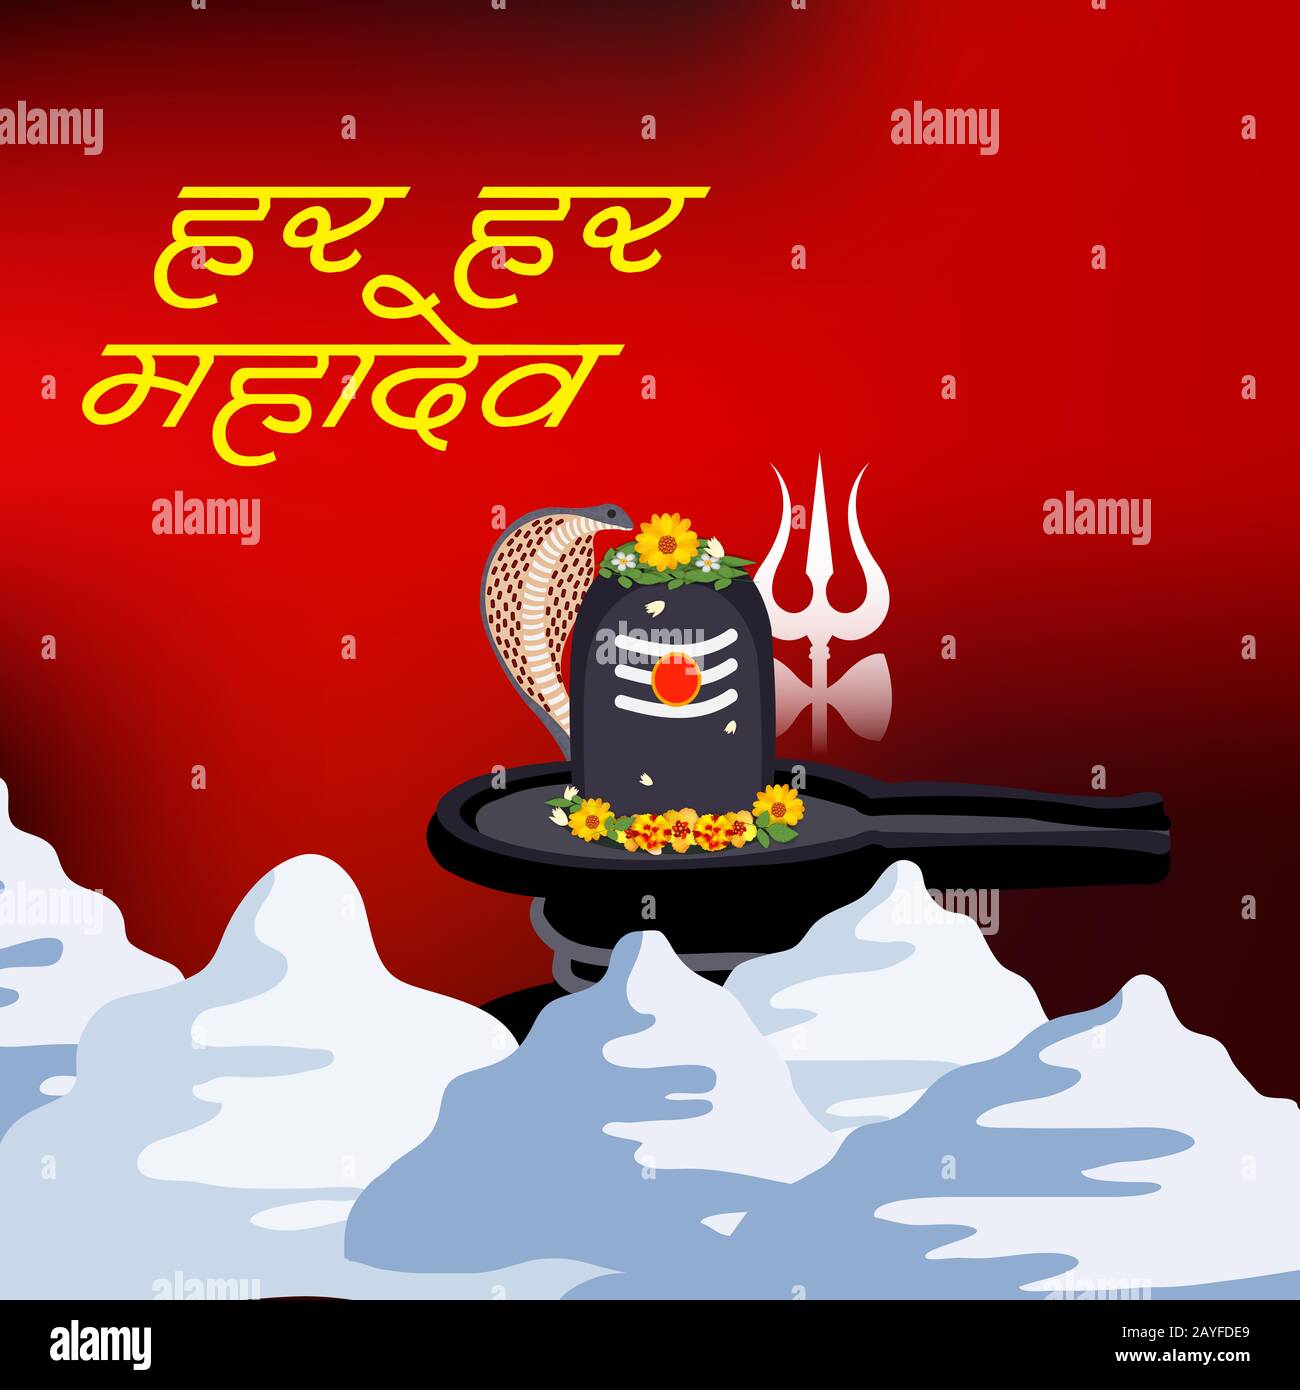 Vector illustration Of a Background for Hindu Festival Celebrate Of Shiva  Lord,Happy Maha Shivratri with Hindi Text Stock Photo - Alamy